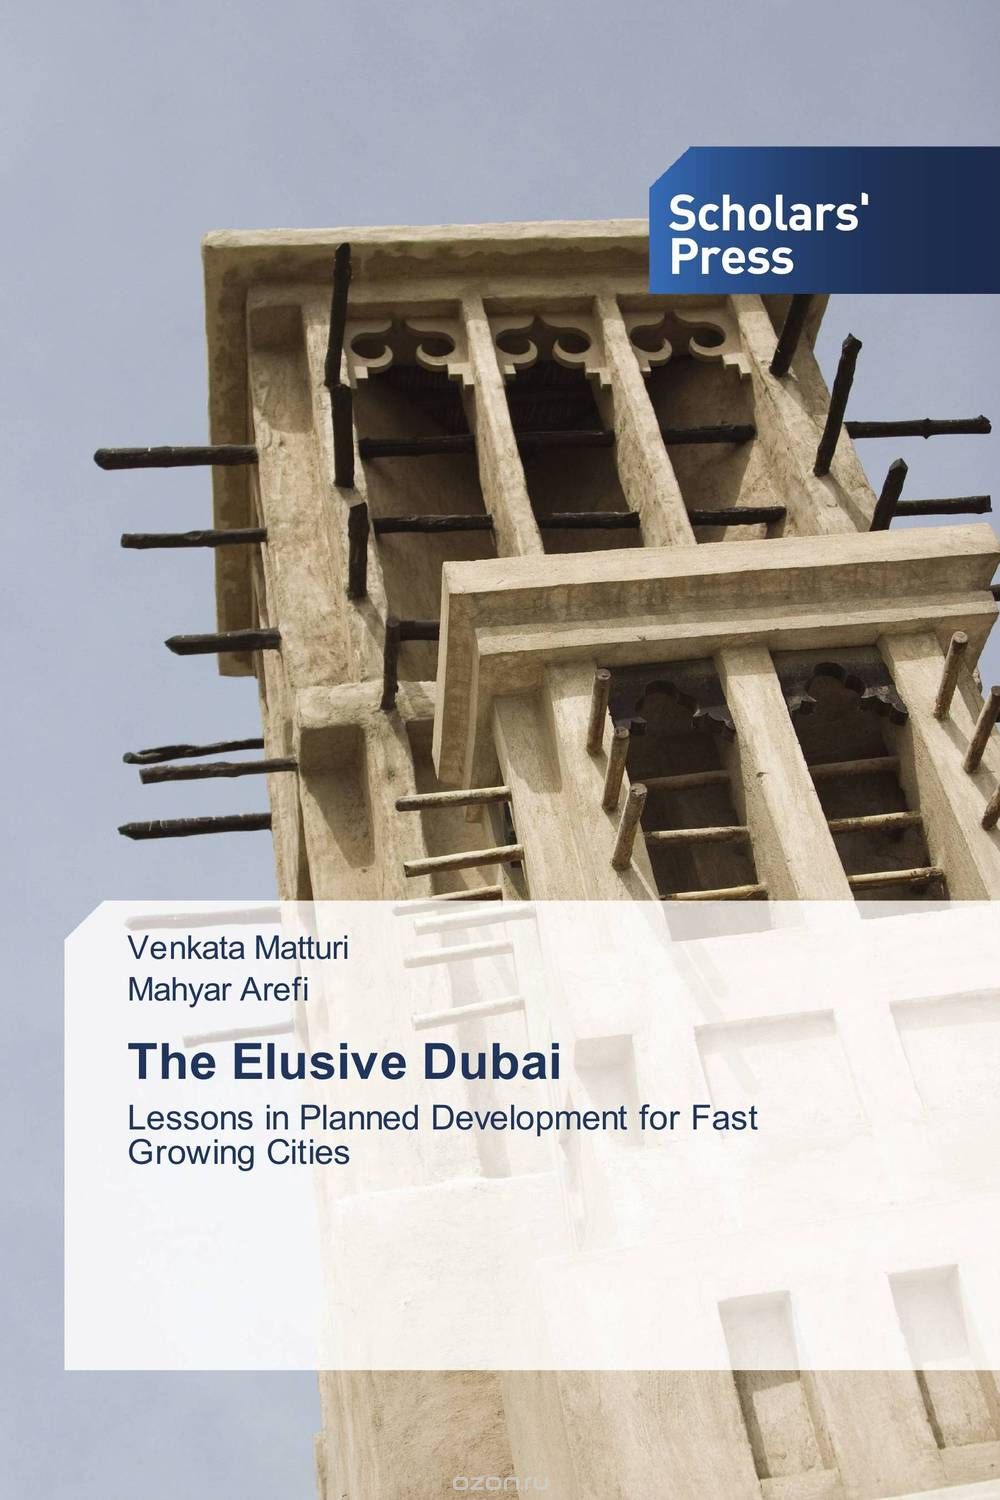 Скачать книгу "The Elusive Dubai"